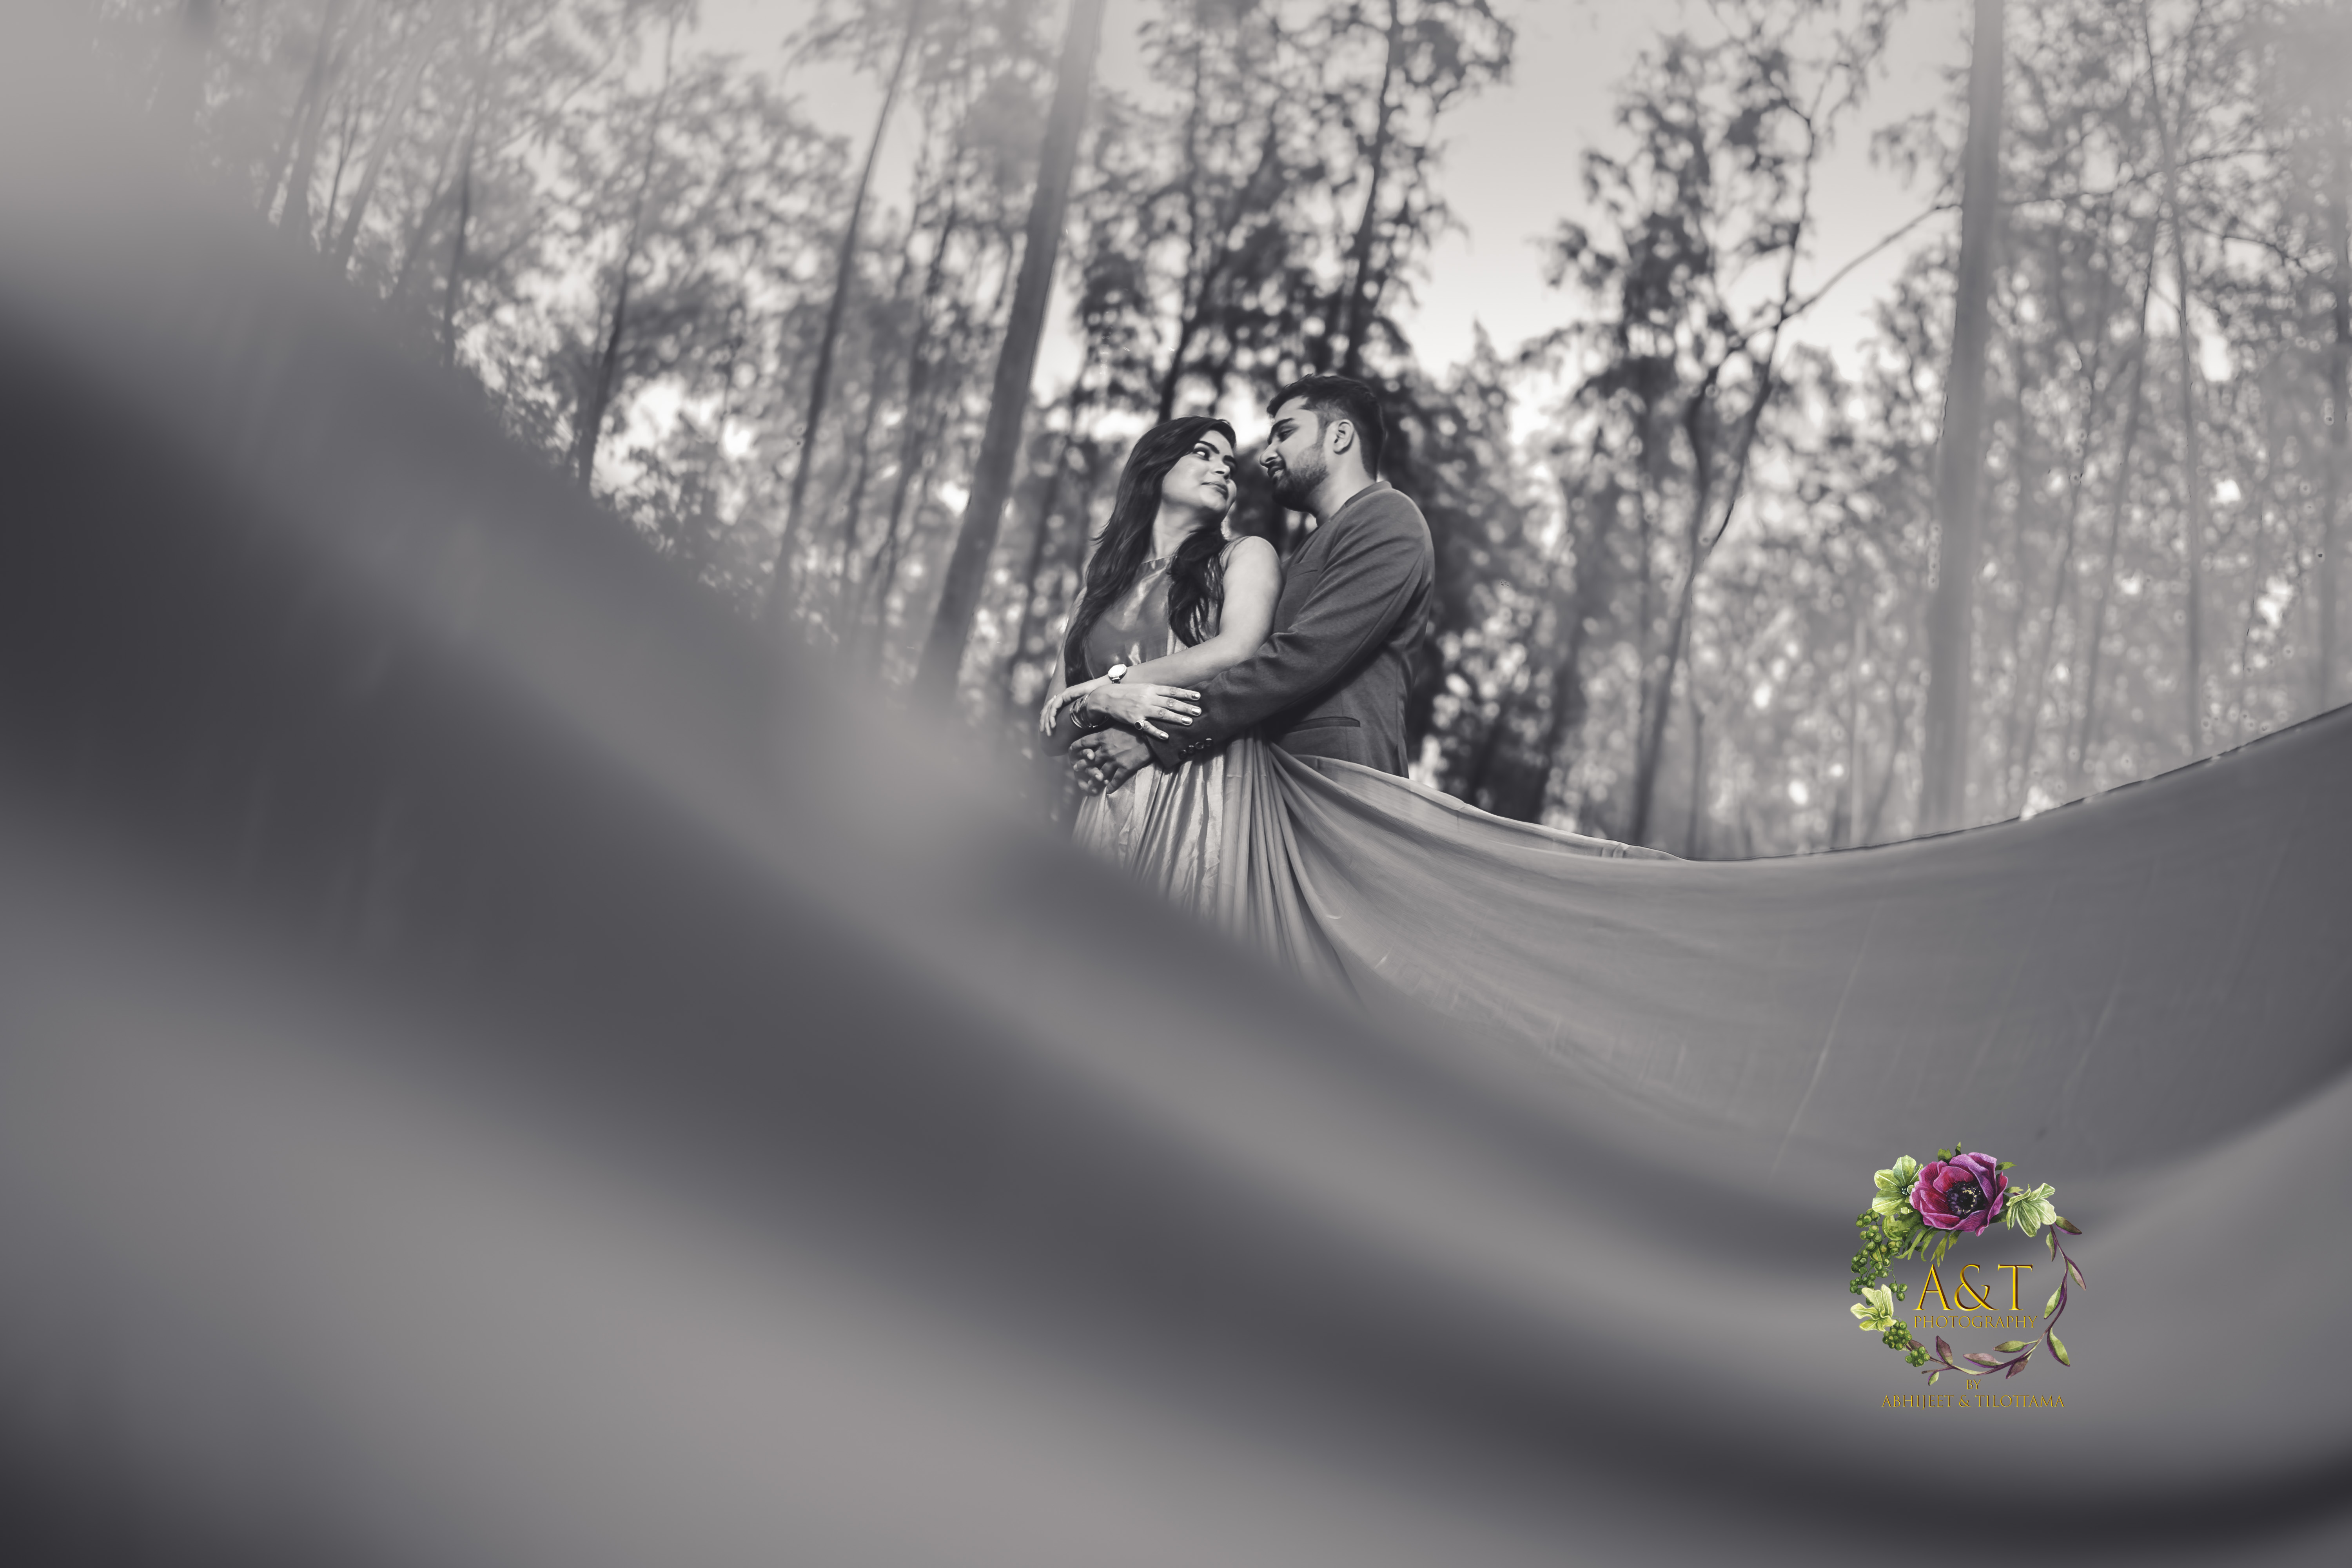 Monil & Vandana's Fairytail Pre-wedding Photoshoot in the lush green forest